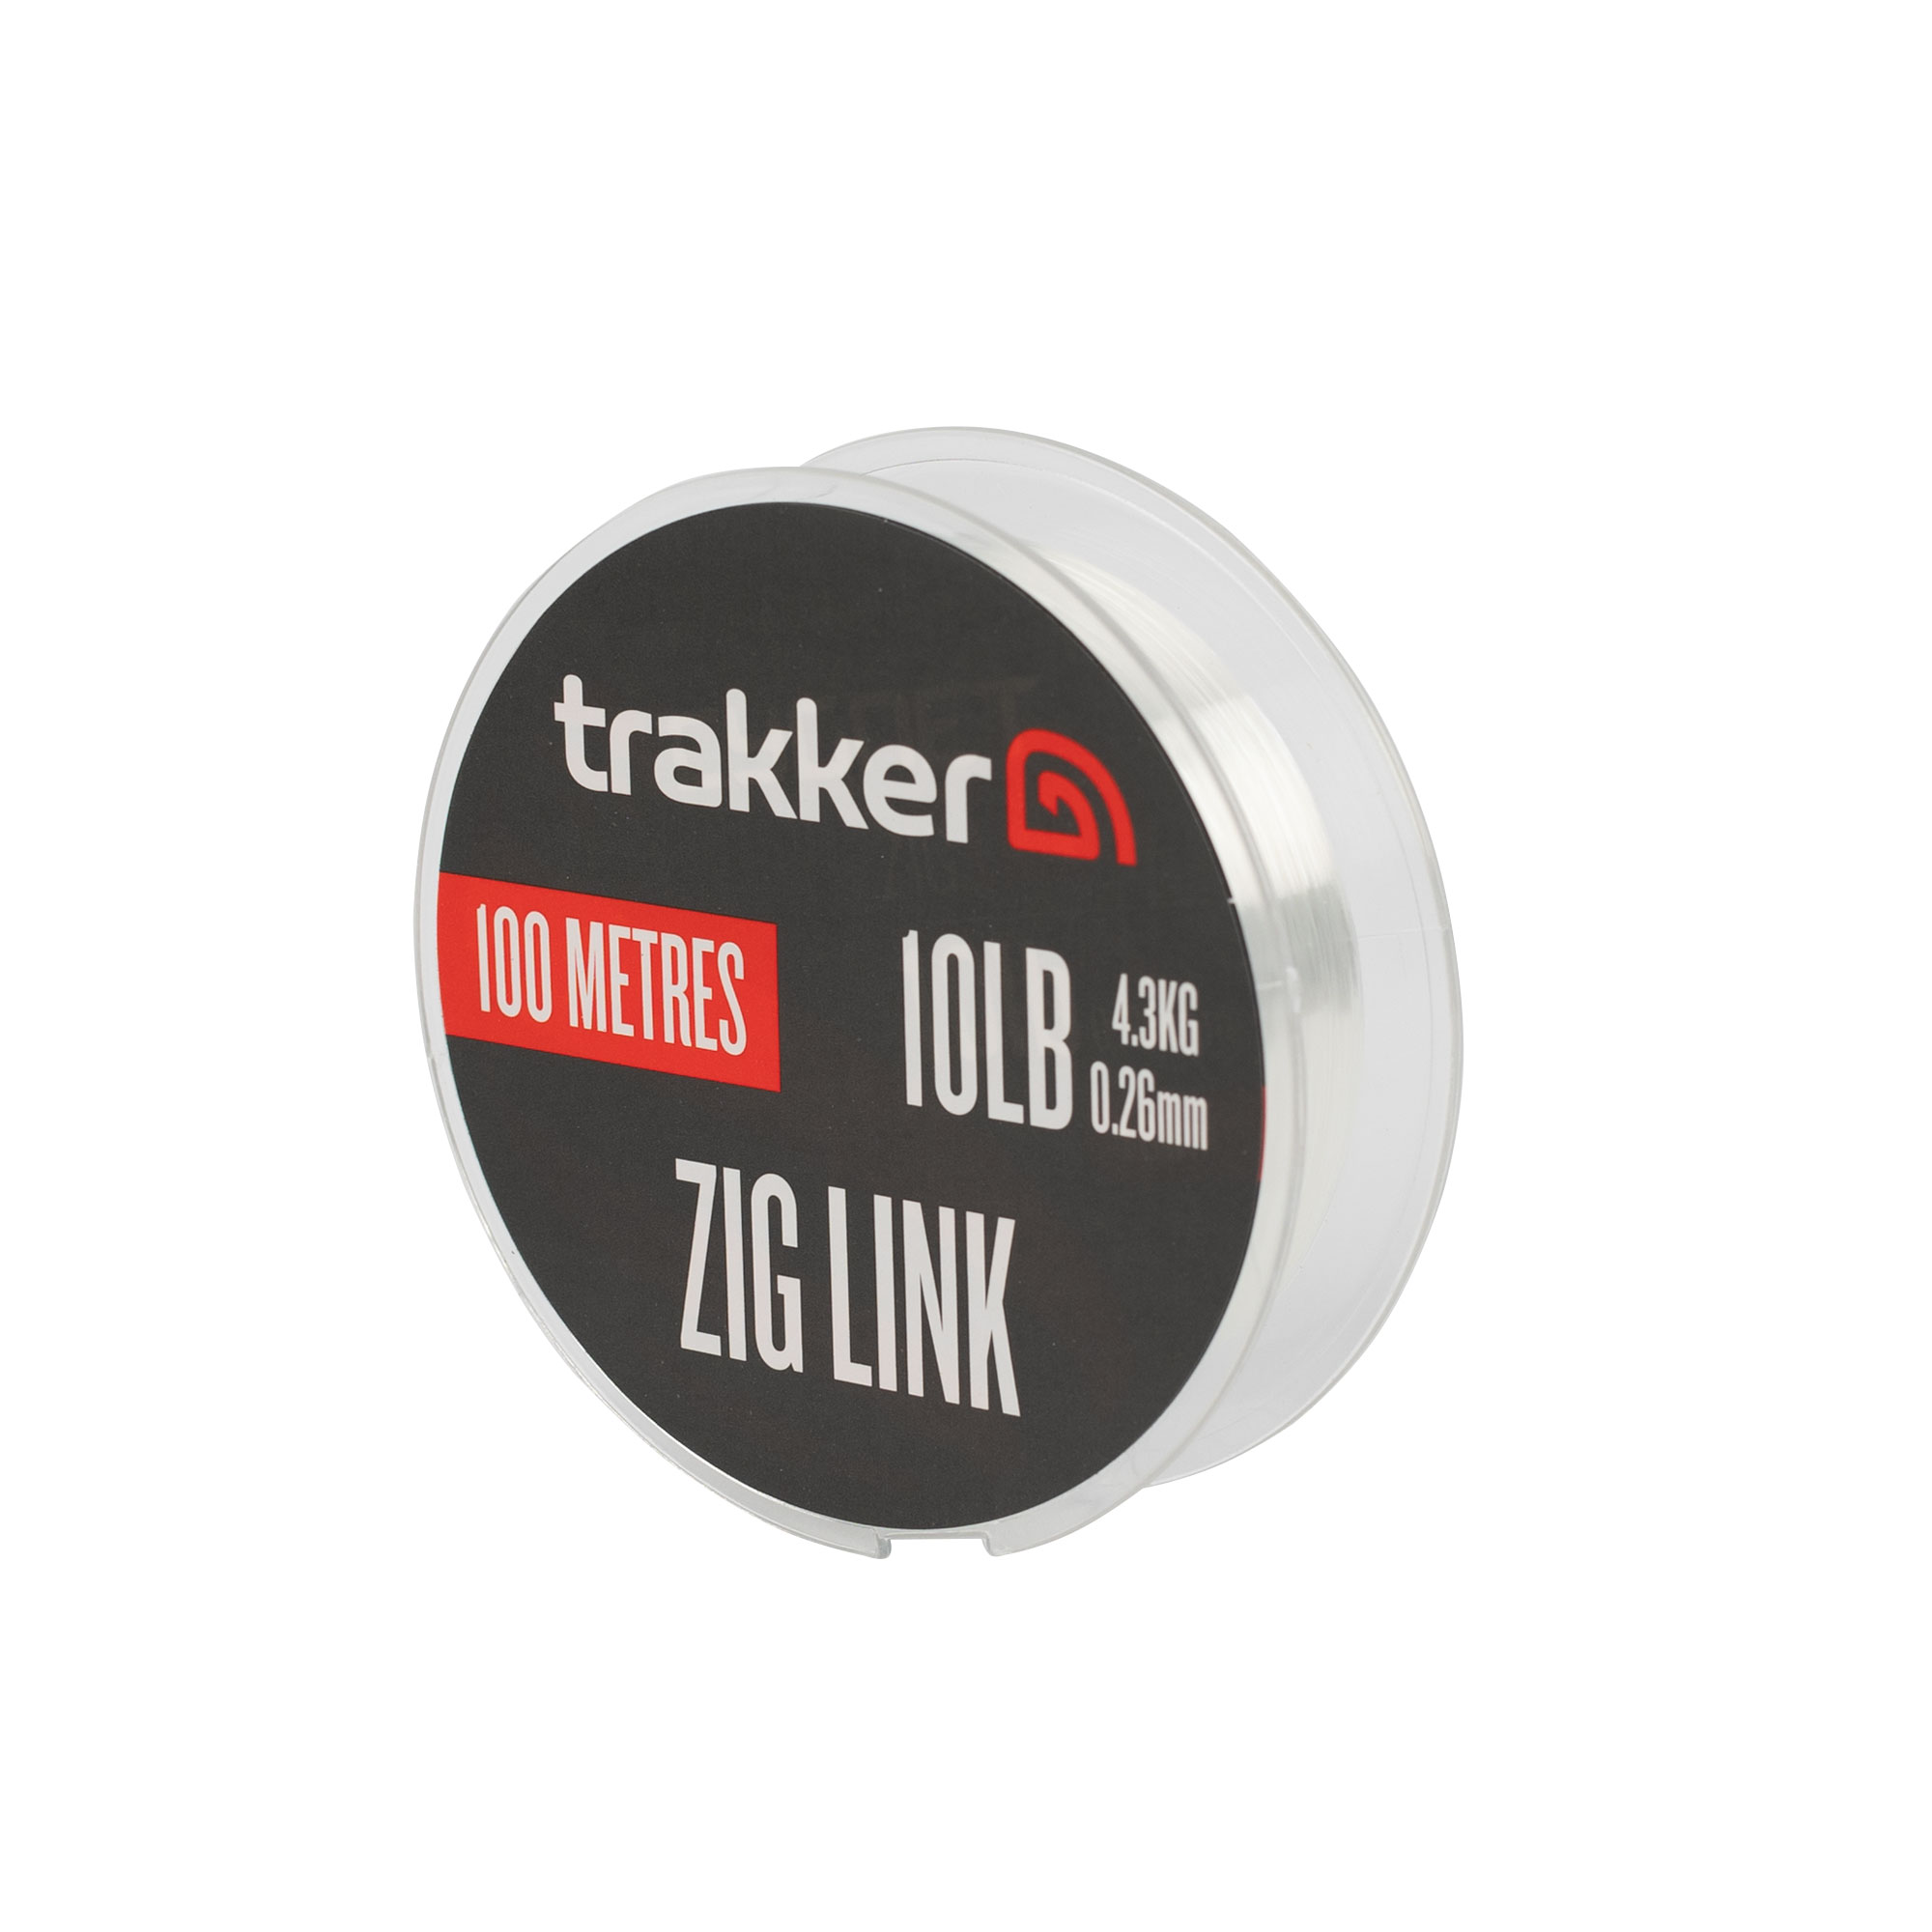 Trakker Zig Link Material para Bajo de Línea (100m)